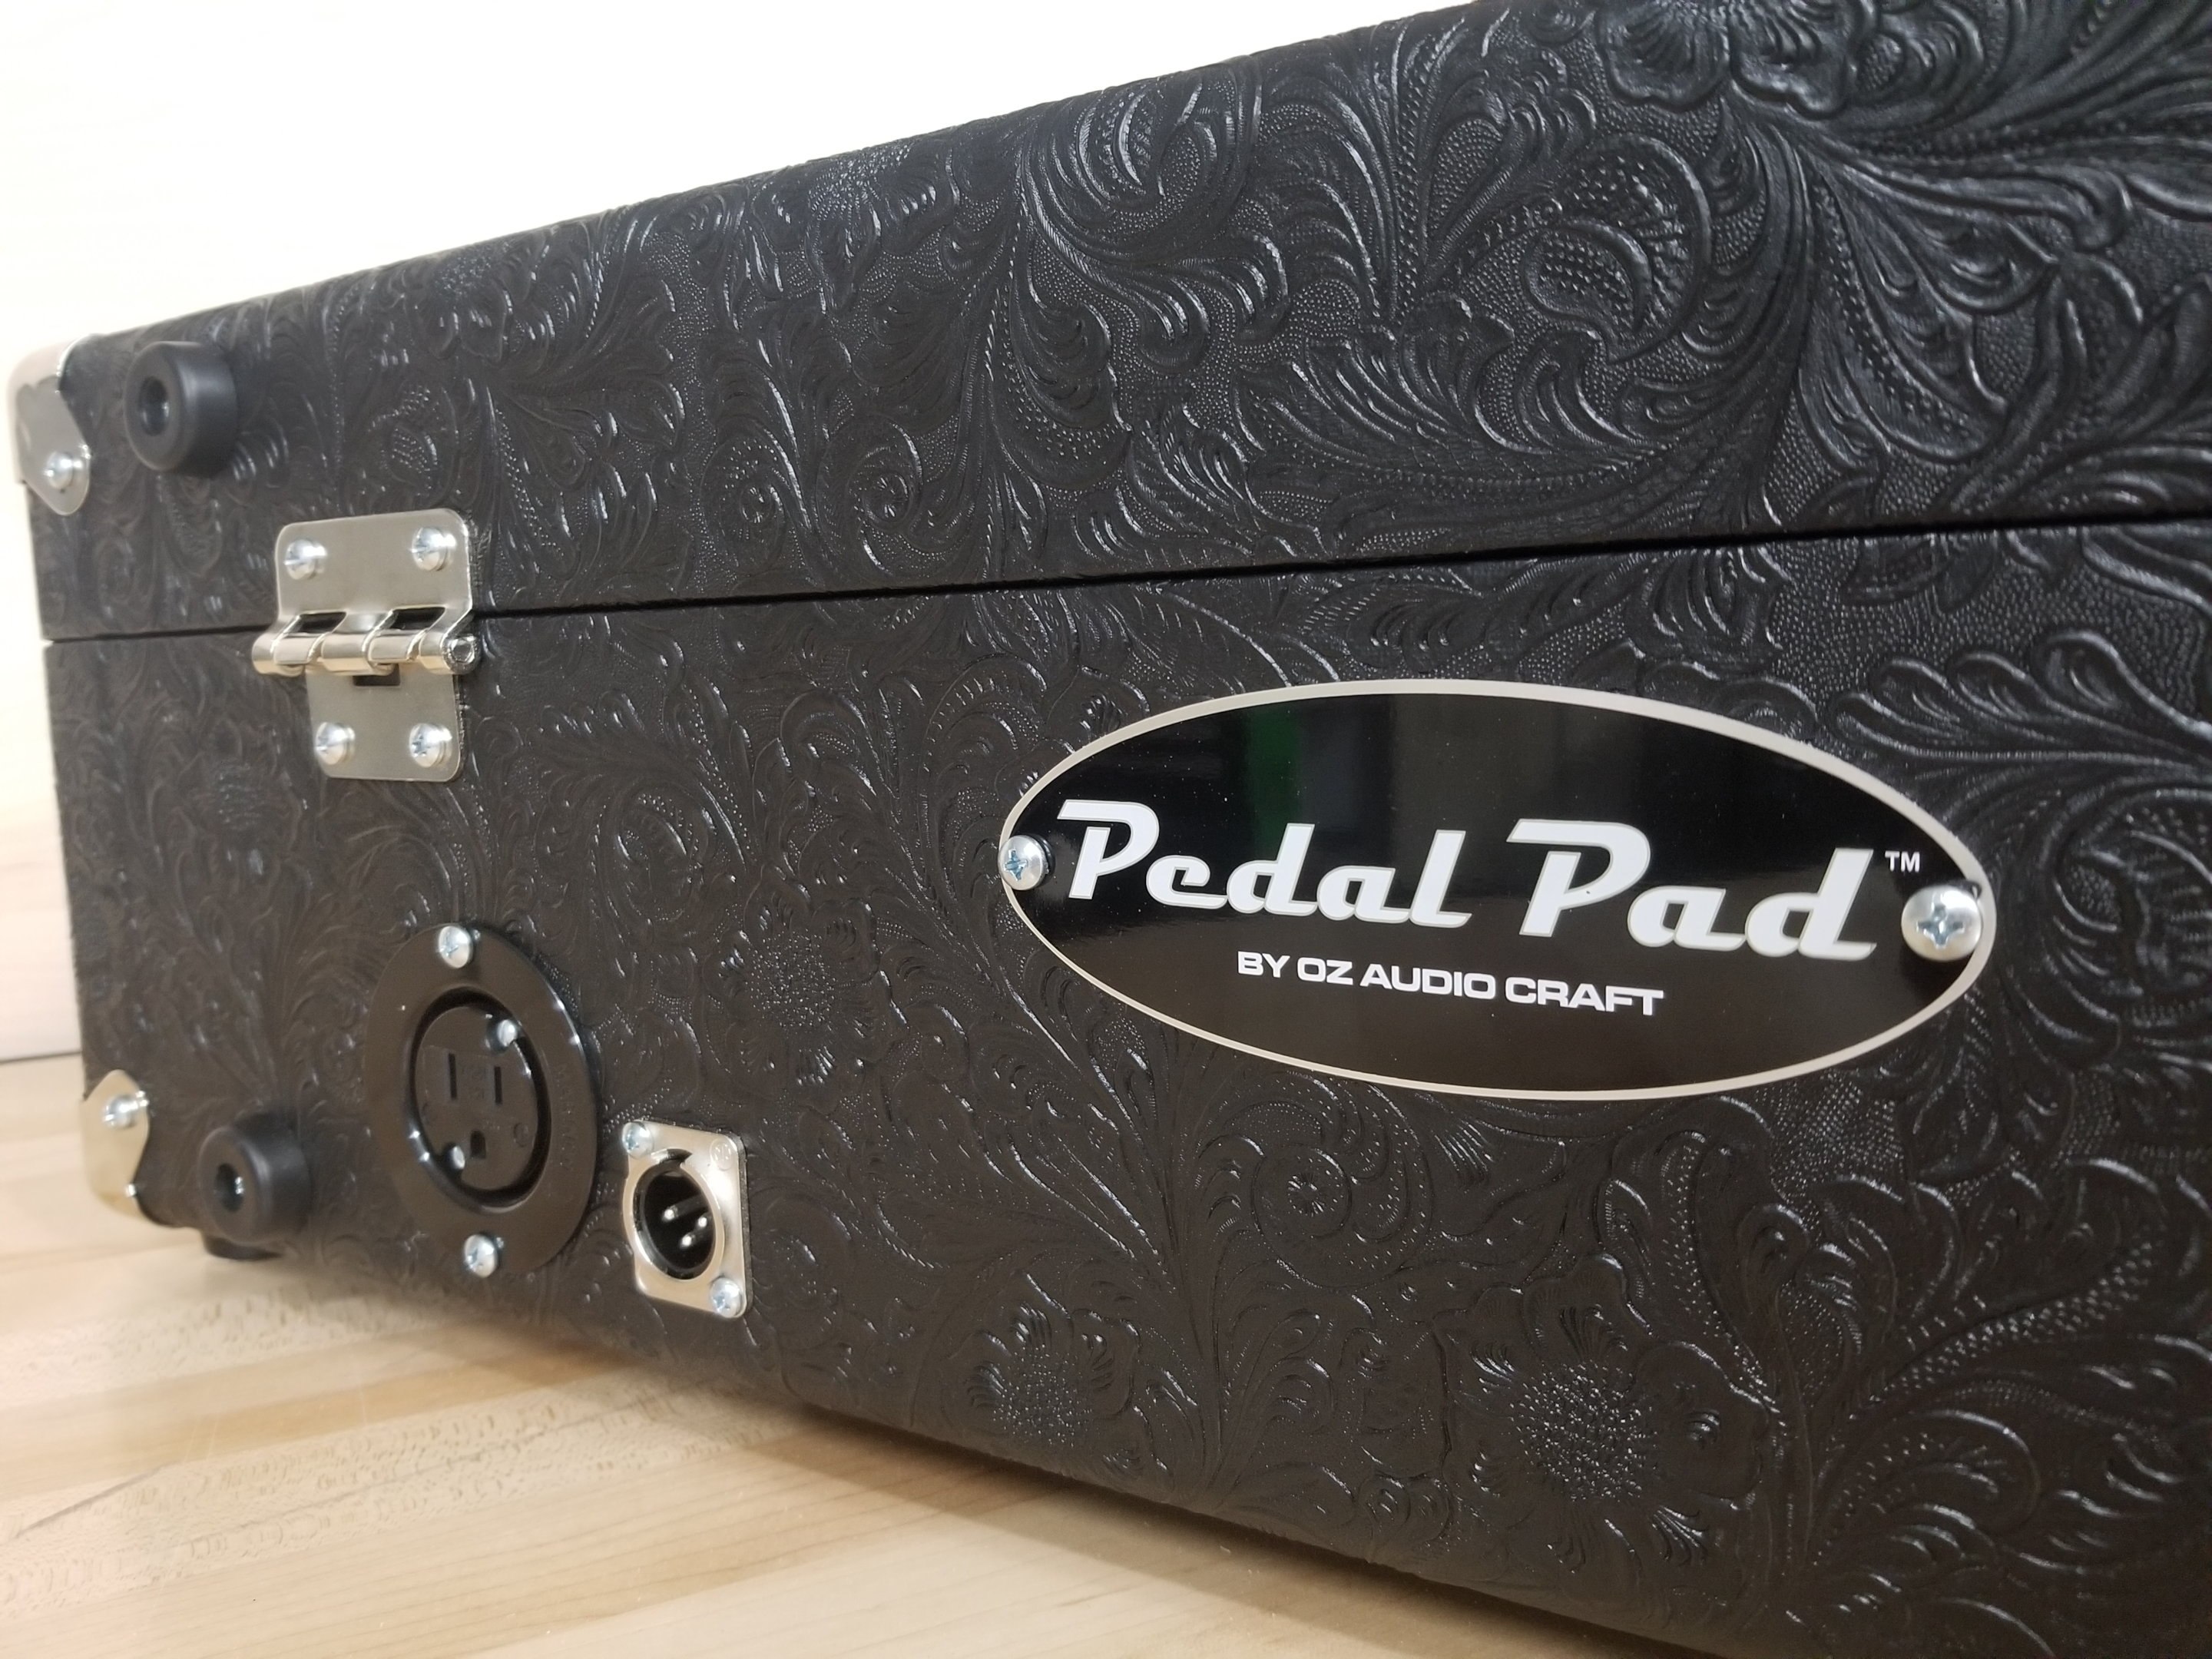 custom wood pedalboard, custom pedal board, small pedal board, pedal pad pedalboard, pedal pad by mks